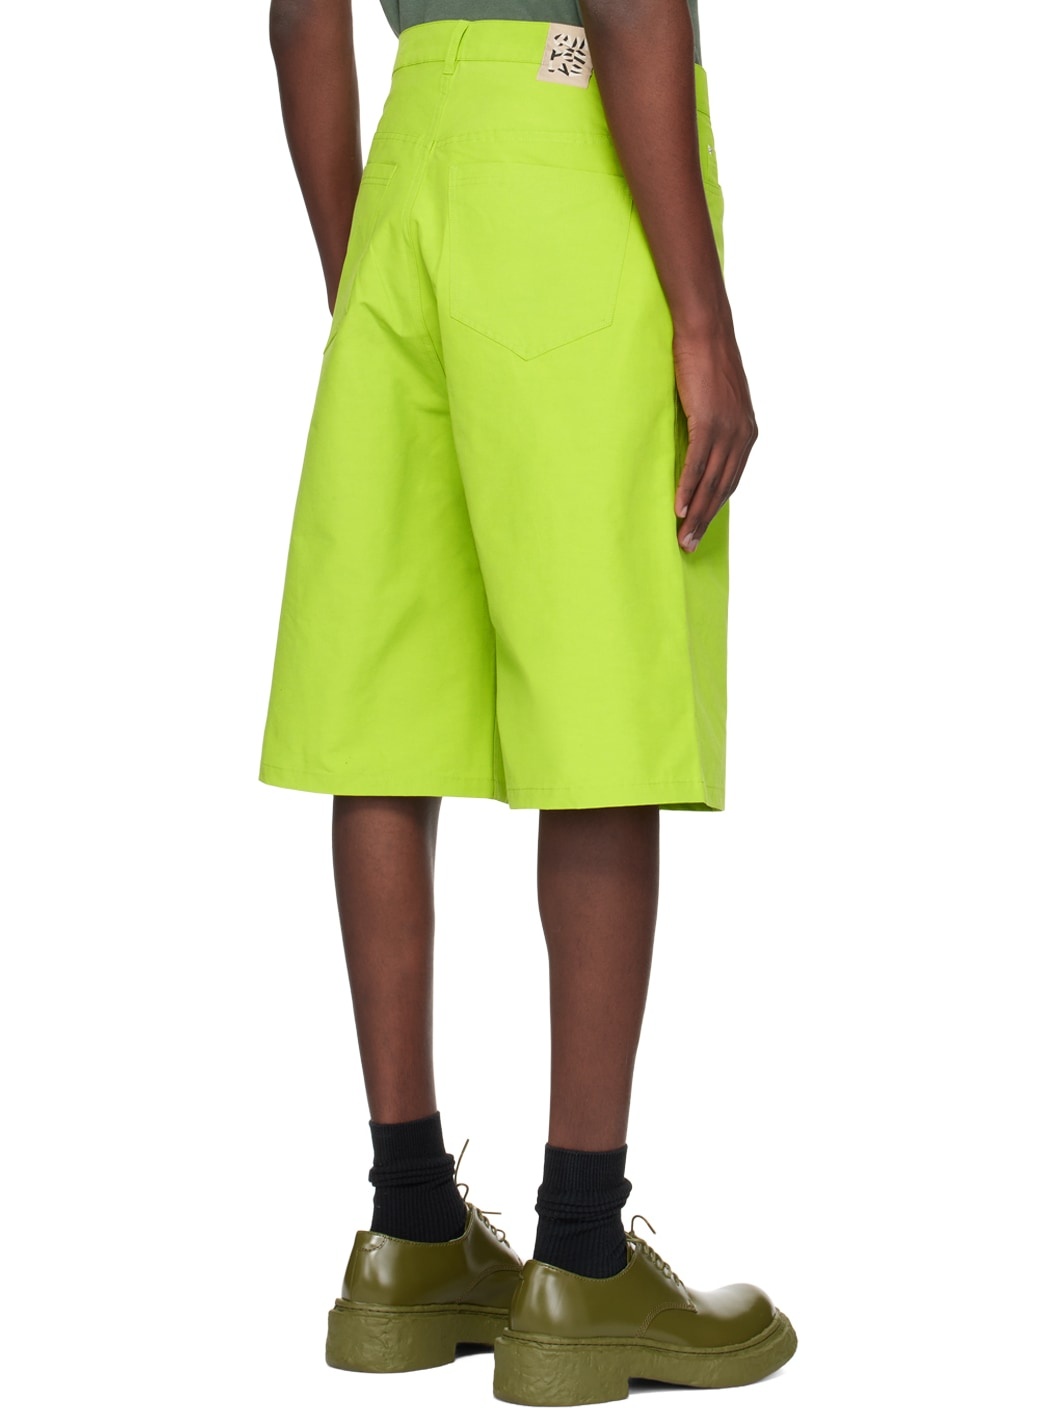 Green Tech Shorts - 3